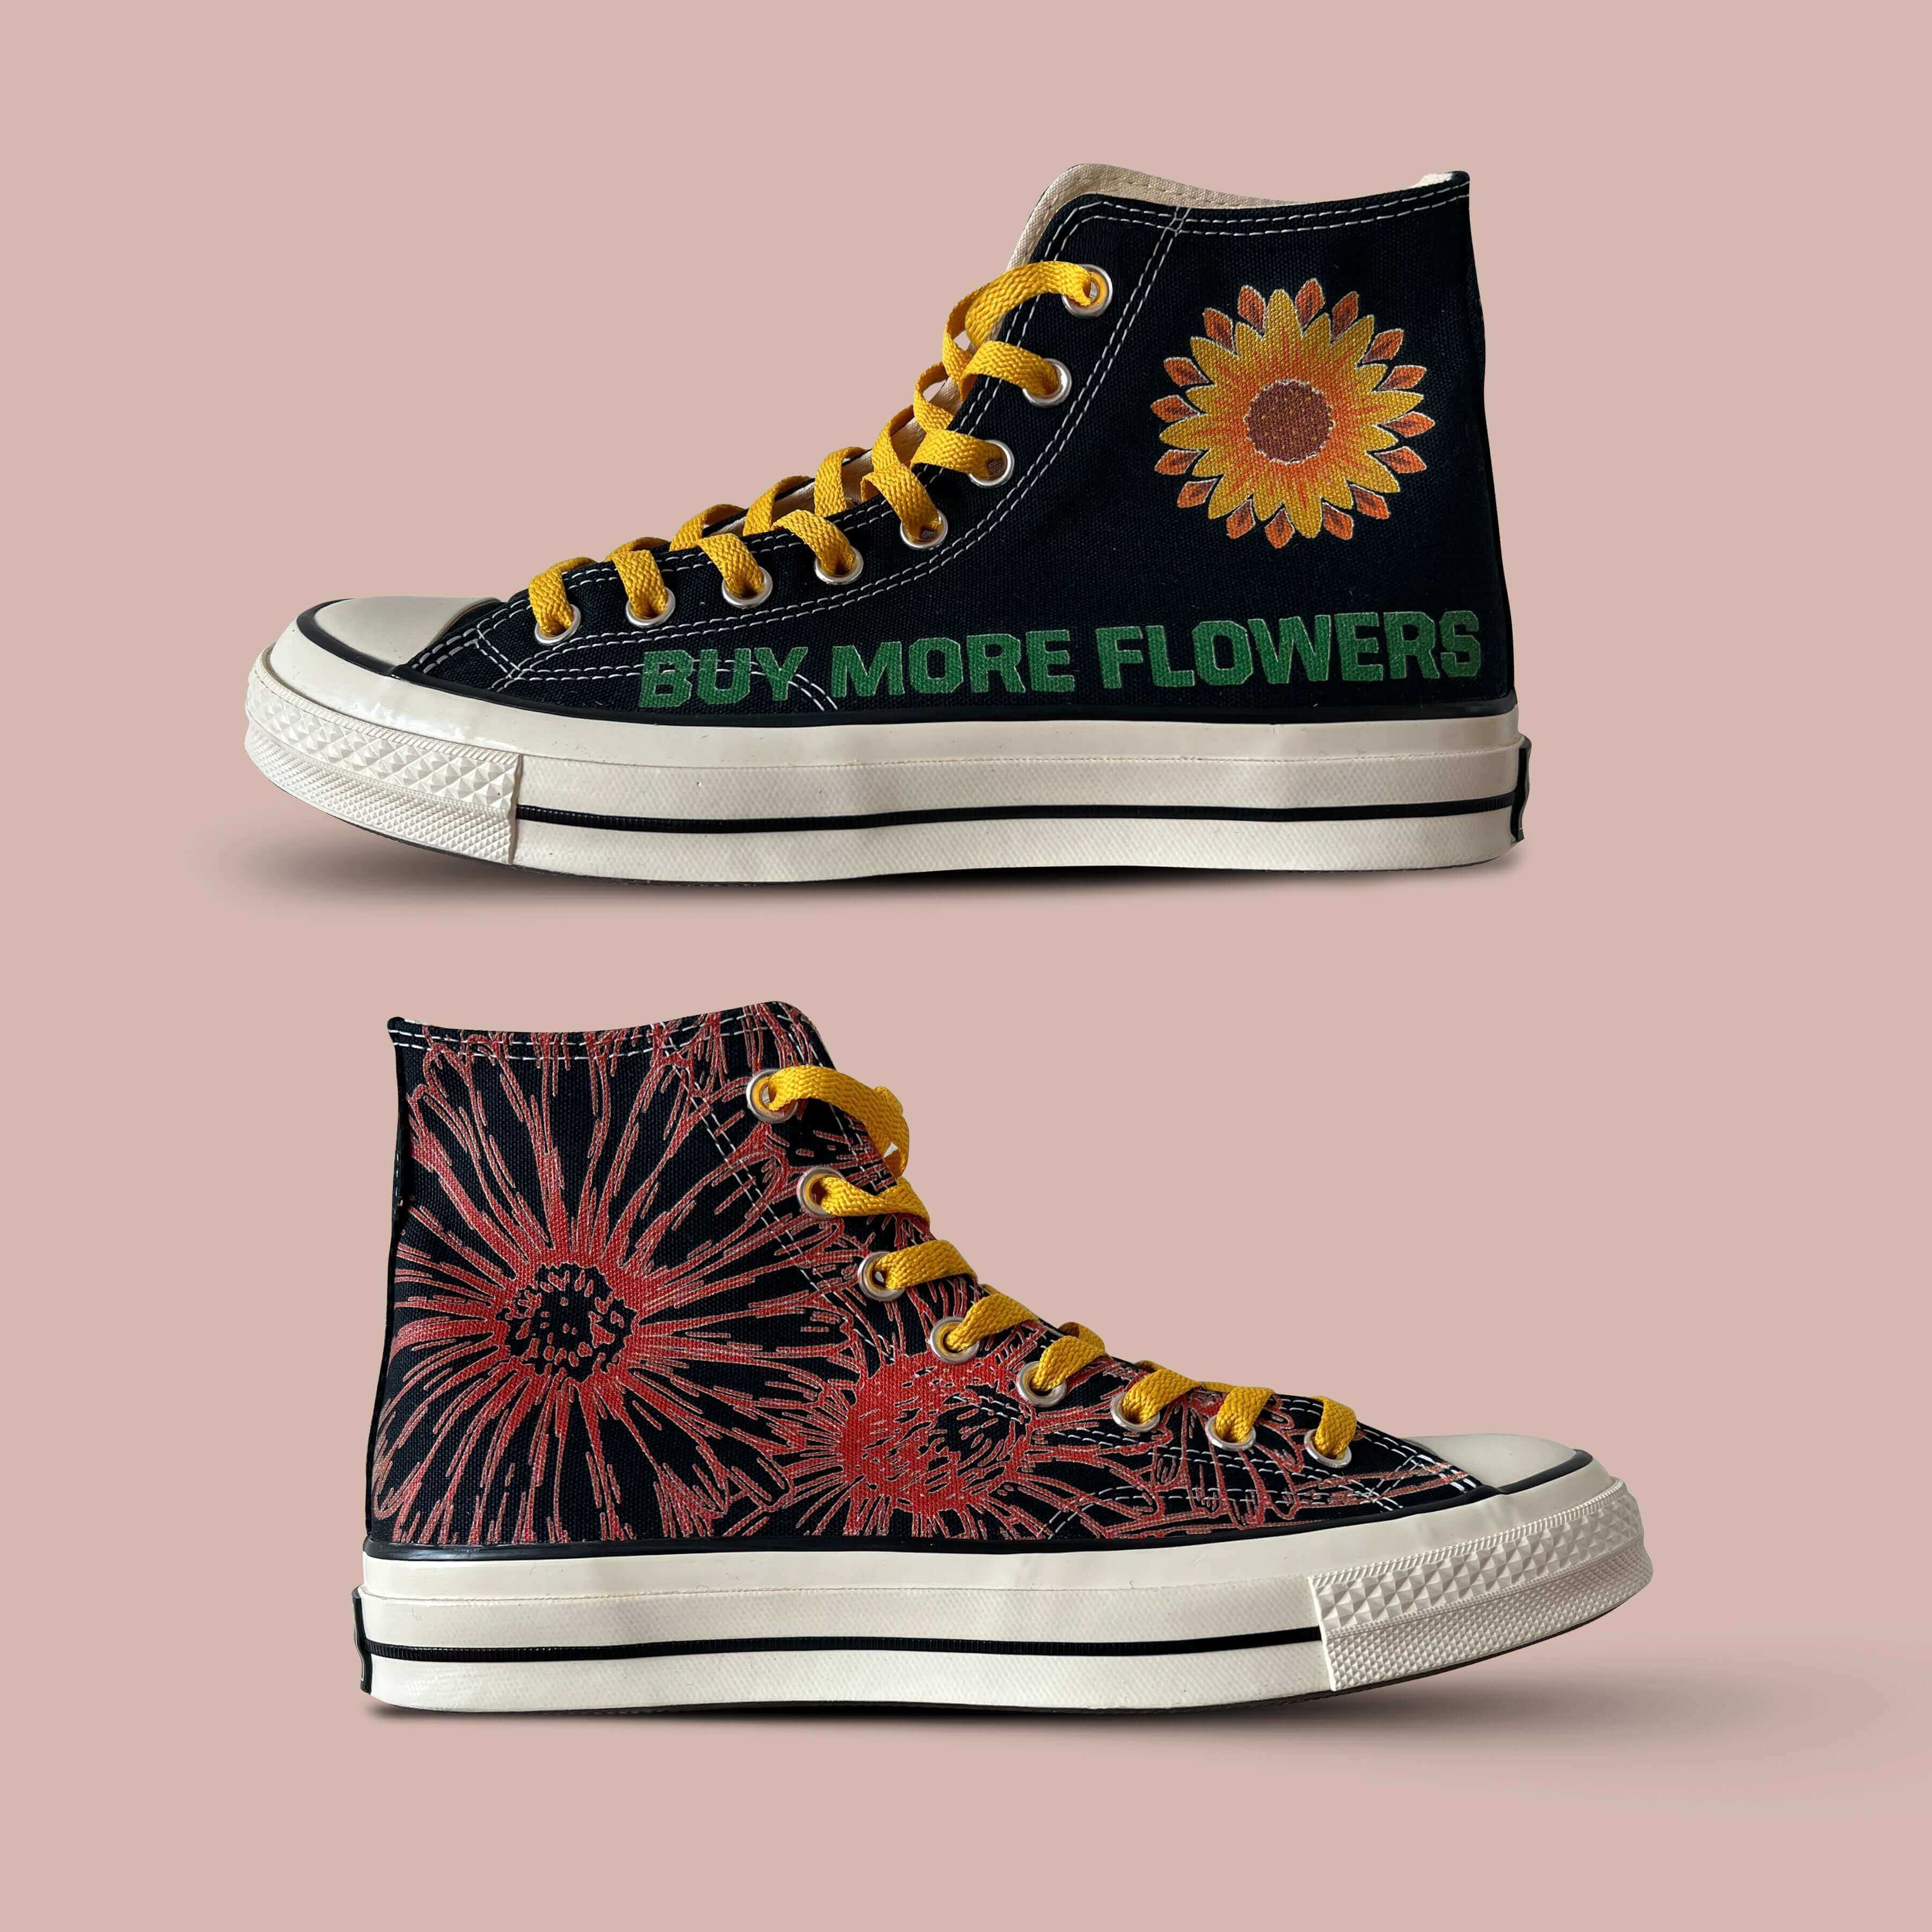 Professor kort Akkumulering Buy More Flowers! Converse Chuck 70s Hi | Floral Sneakers